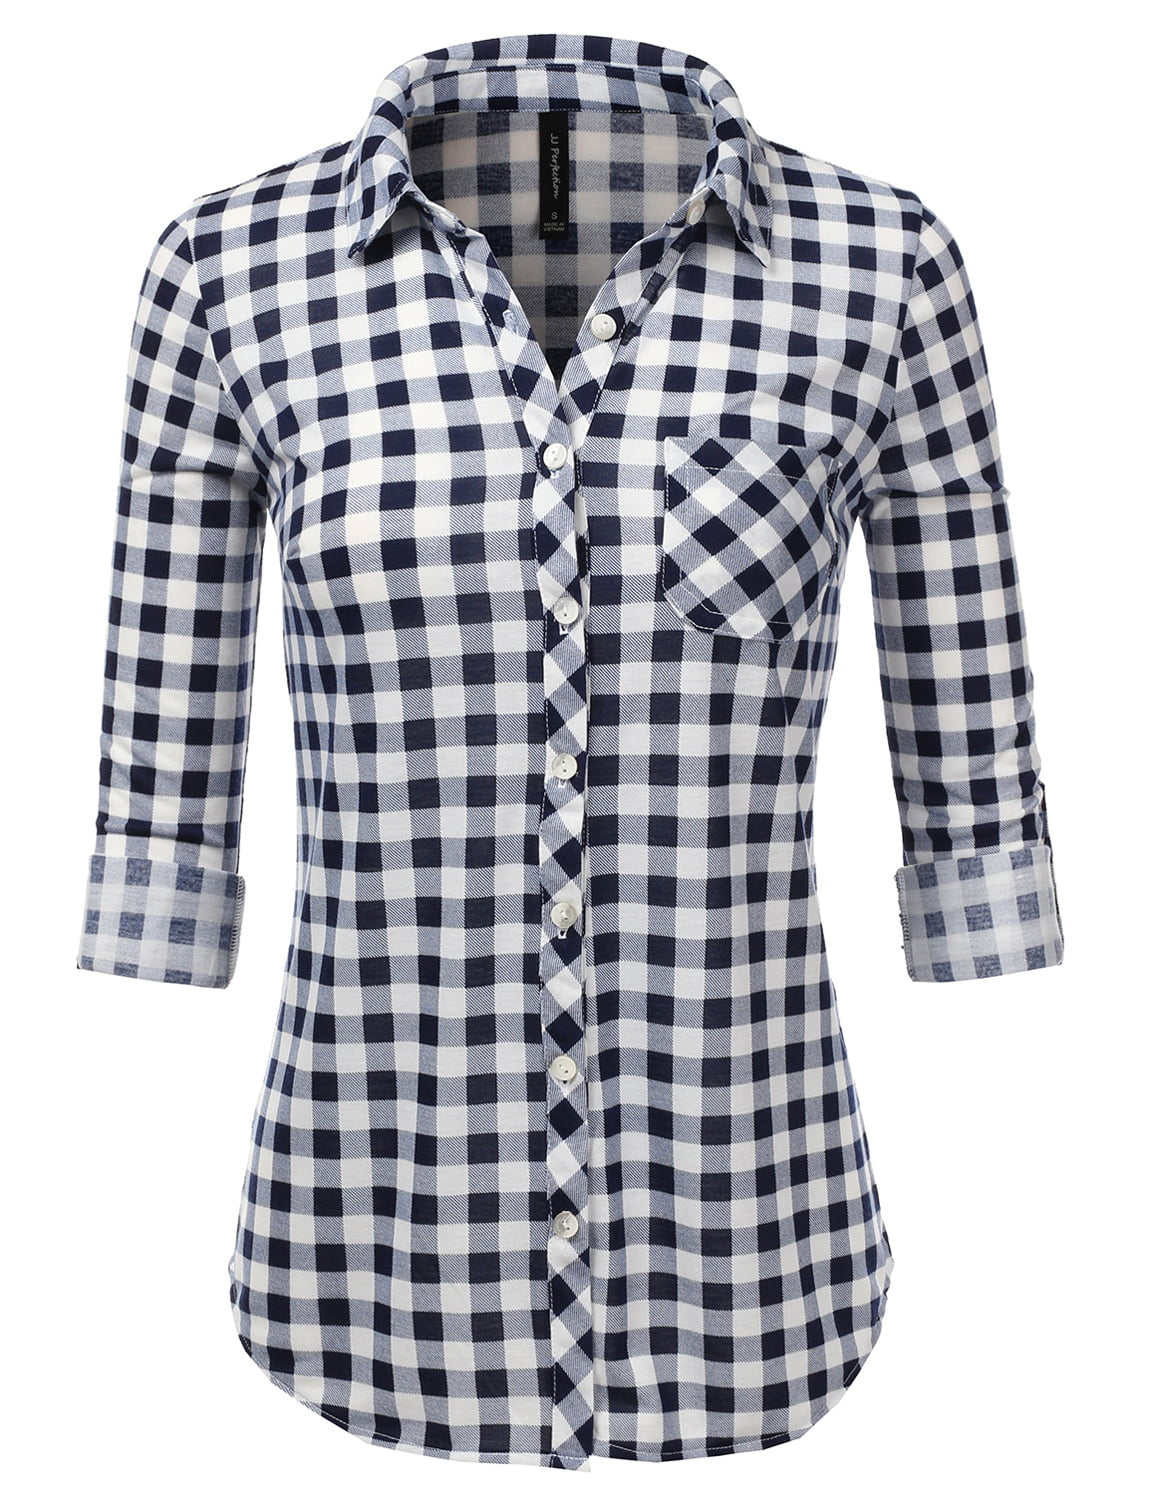 JJ Perfection Women's Long Sleeve Button Down Plaid Flannel Shirt Greenblack 3X